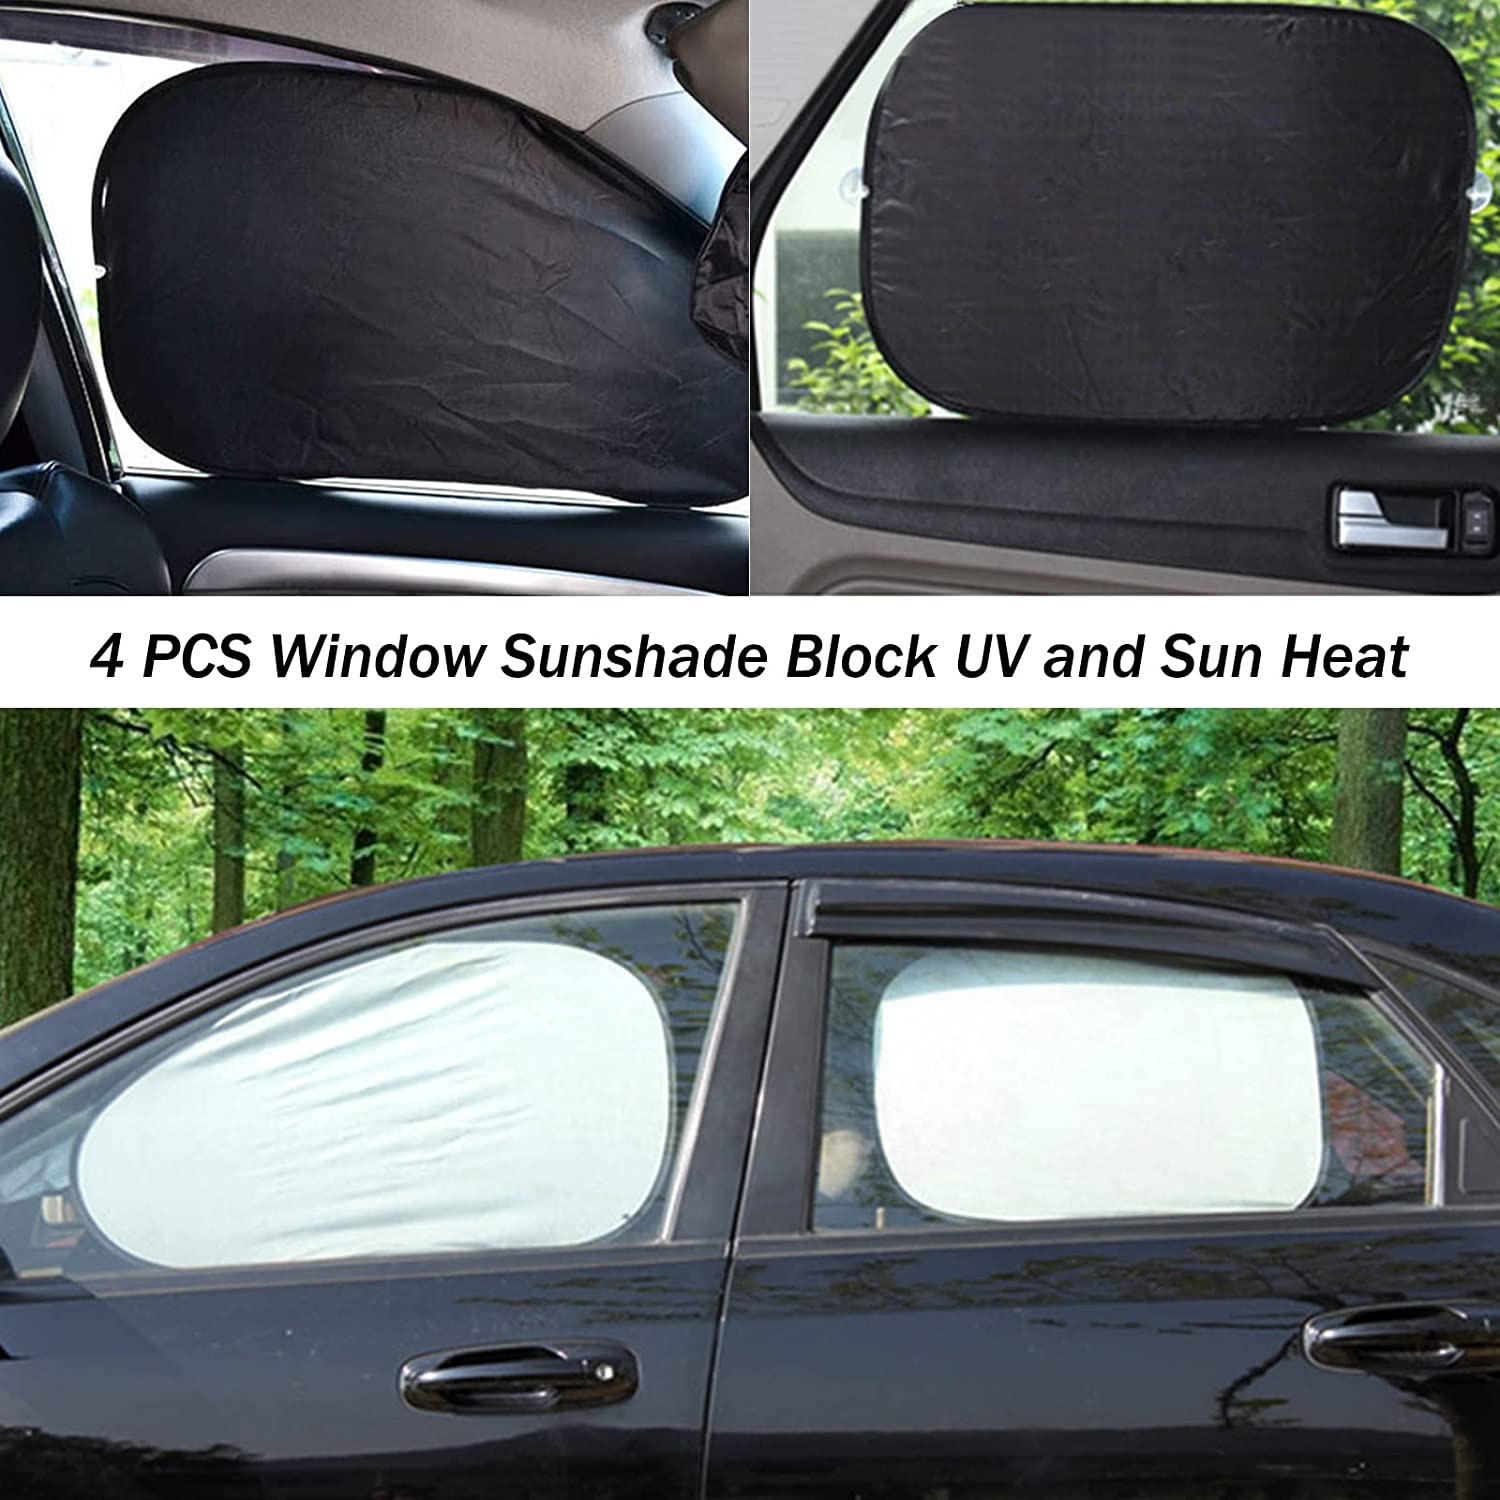 Pcs Foldable Auto Car Windshield Sunshade, Full Sun Protection Blocking  UV Rays for Cars Cover